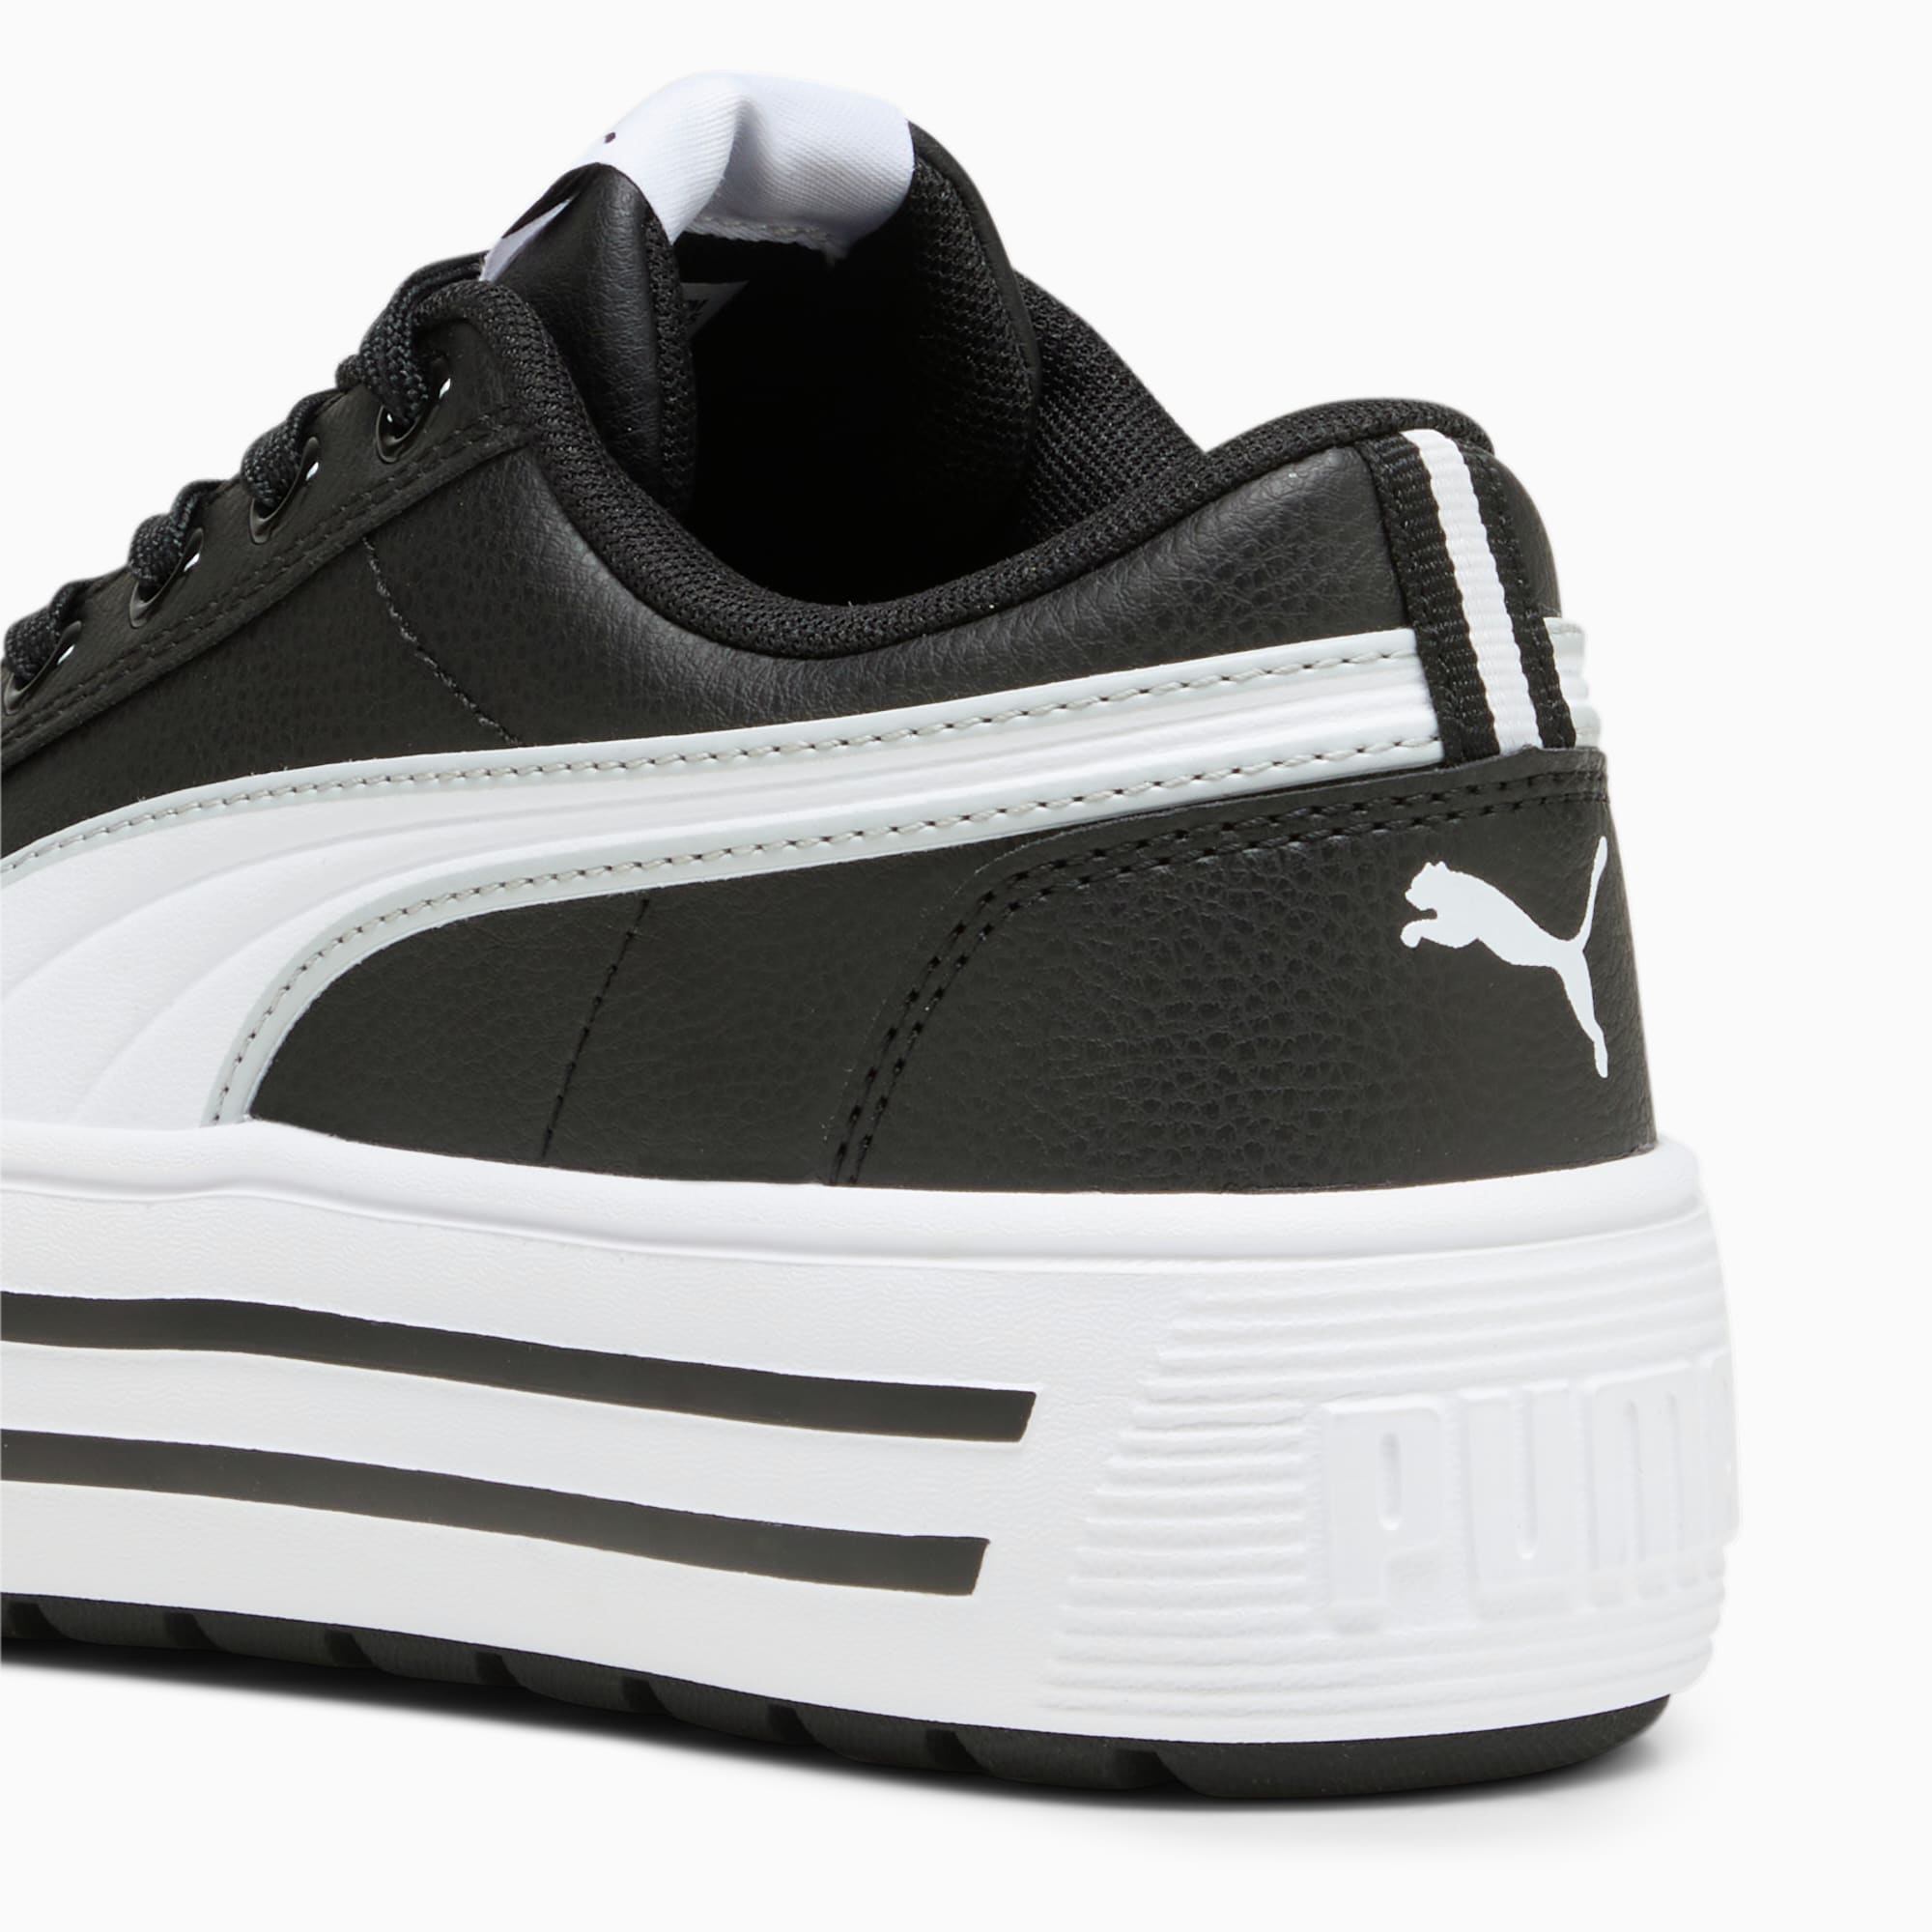 PUMA Kaia 2.0 Women's Sneakers, Black/White/Ash Grey, Size 35,5, Shoes